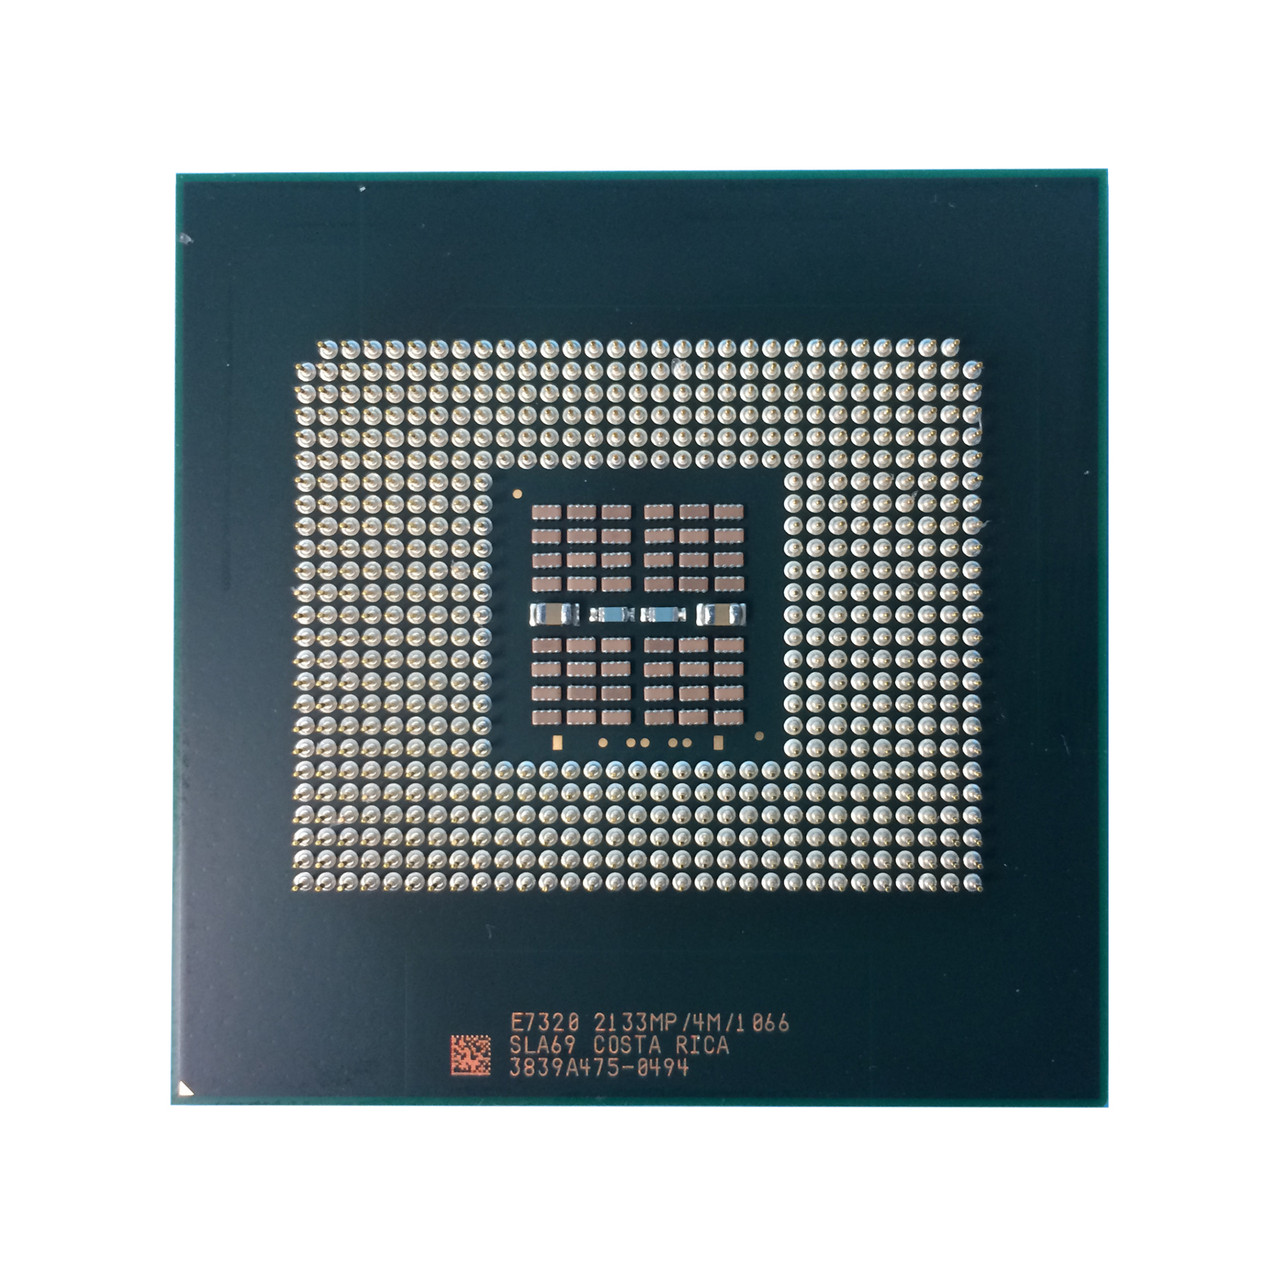 Intel SLA69 Xeon E7320 QC 2.13GHz 4MB Processor